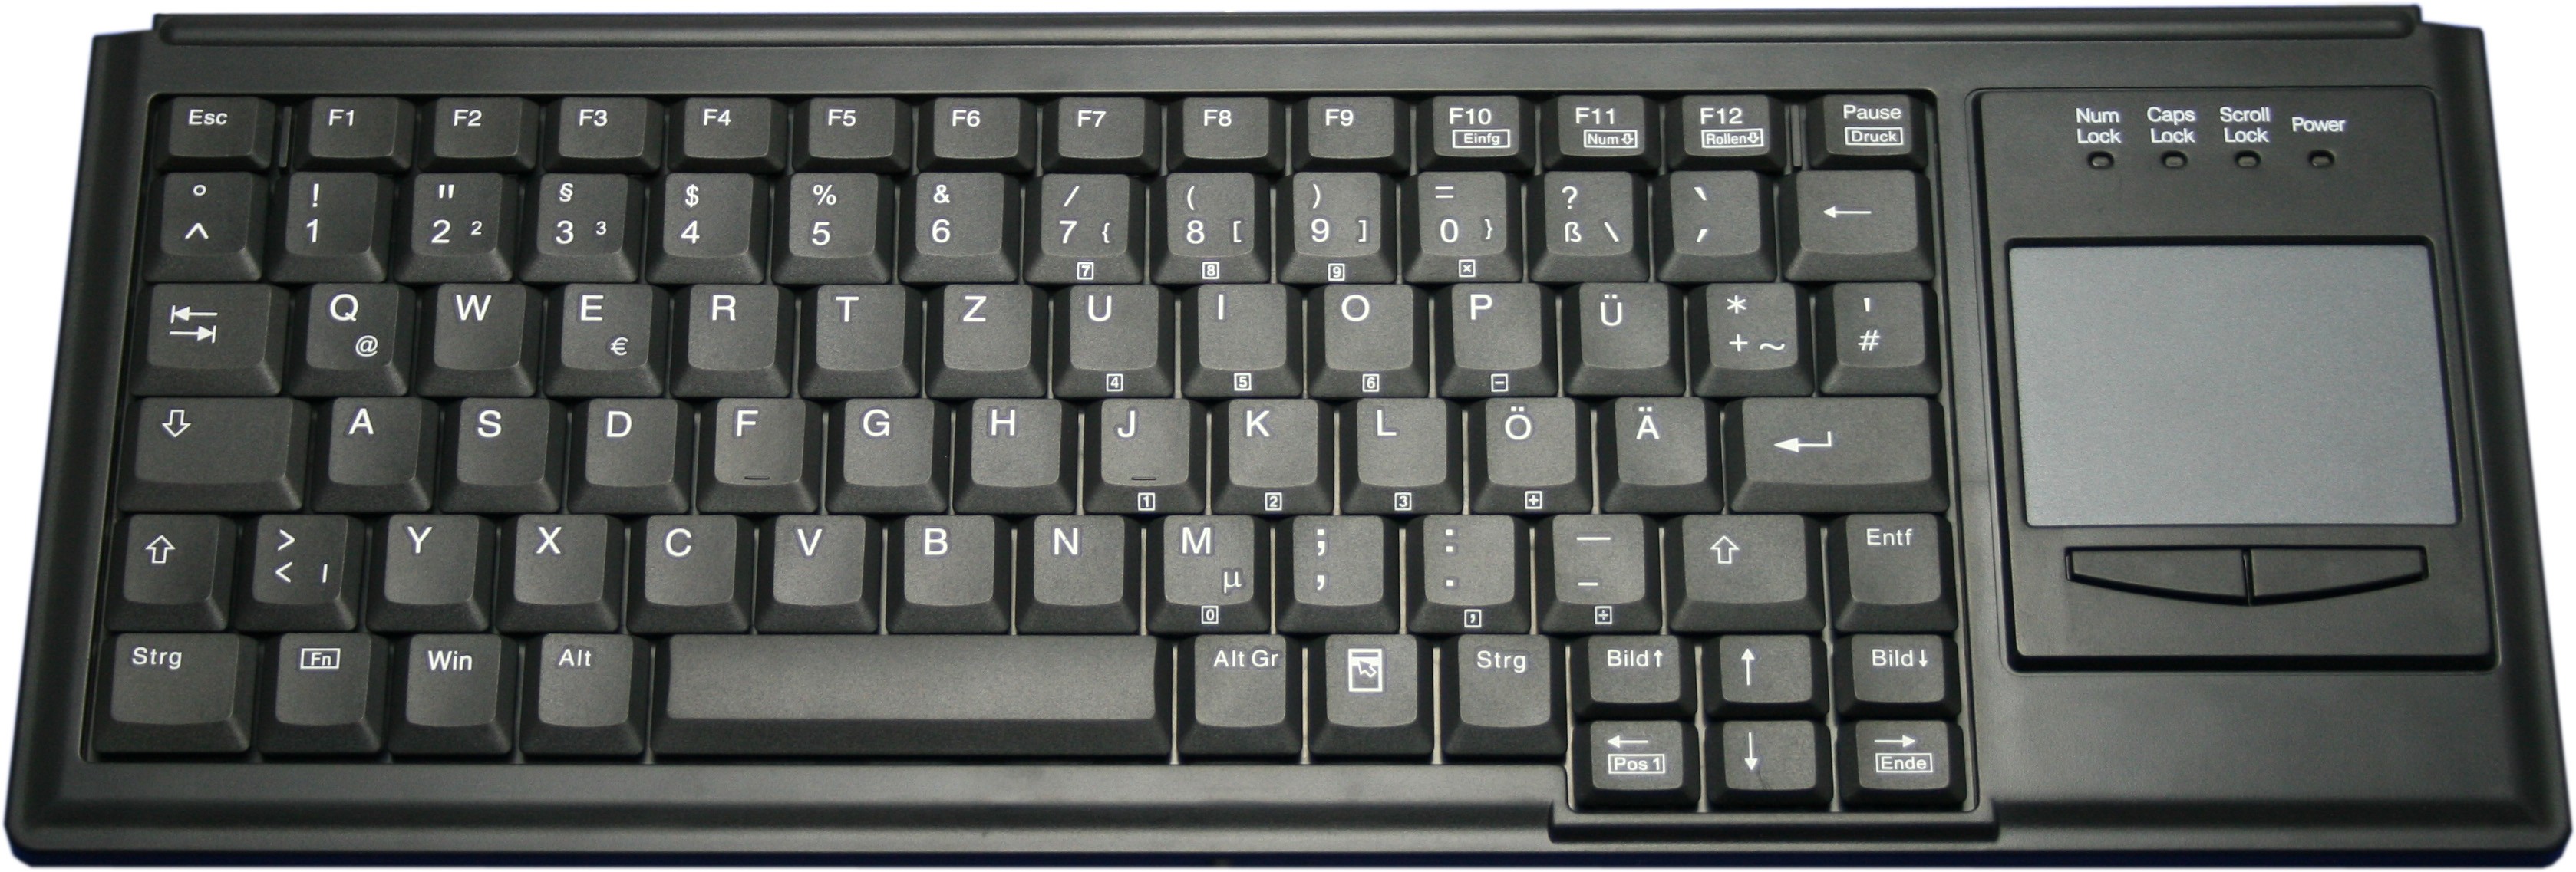 Industry 4.0 Compact Ultraflat Touchpad Keyboard PS2 Black, swiss layout